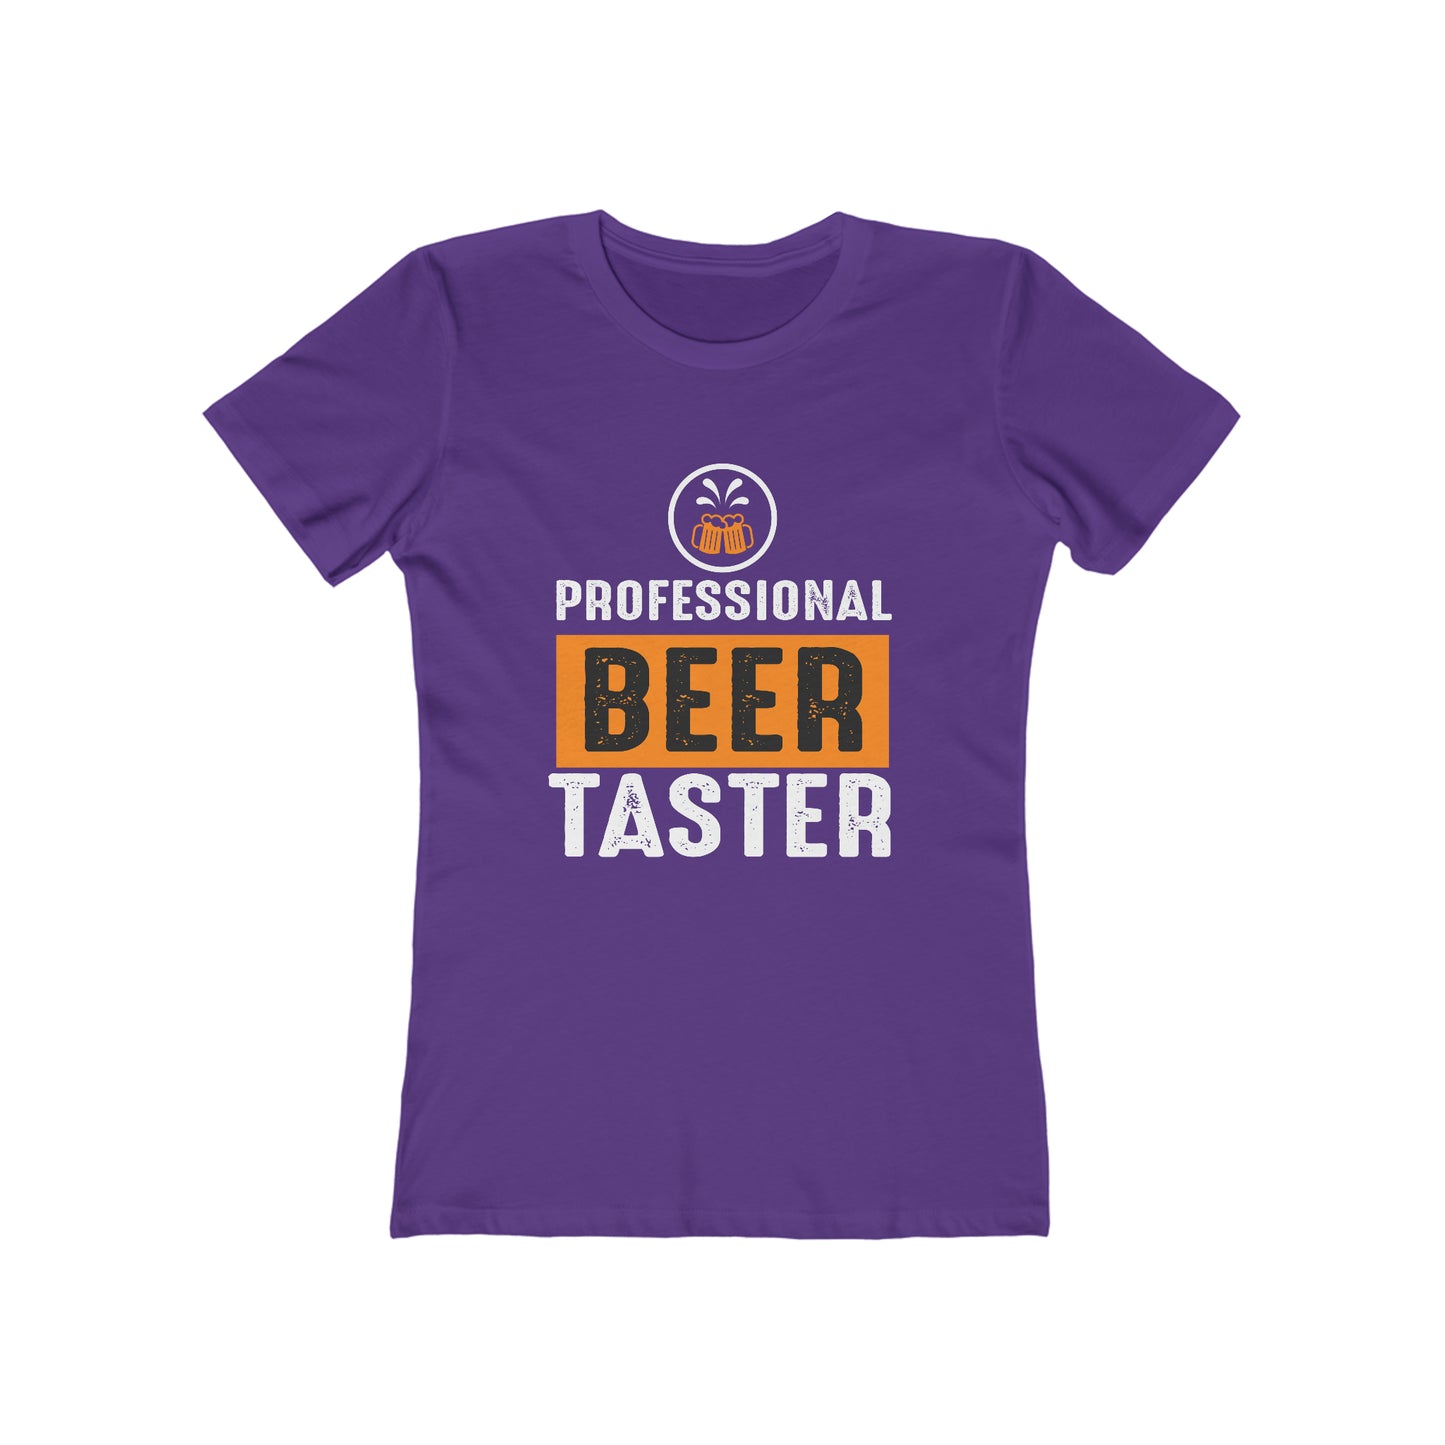 Professional Beer Taster - Women's T-shirt